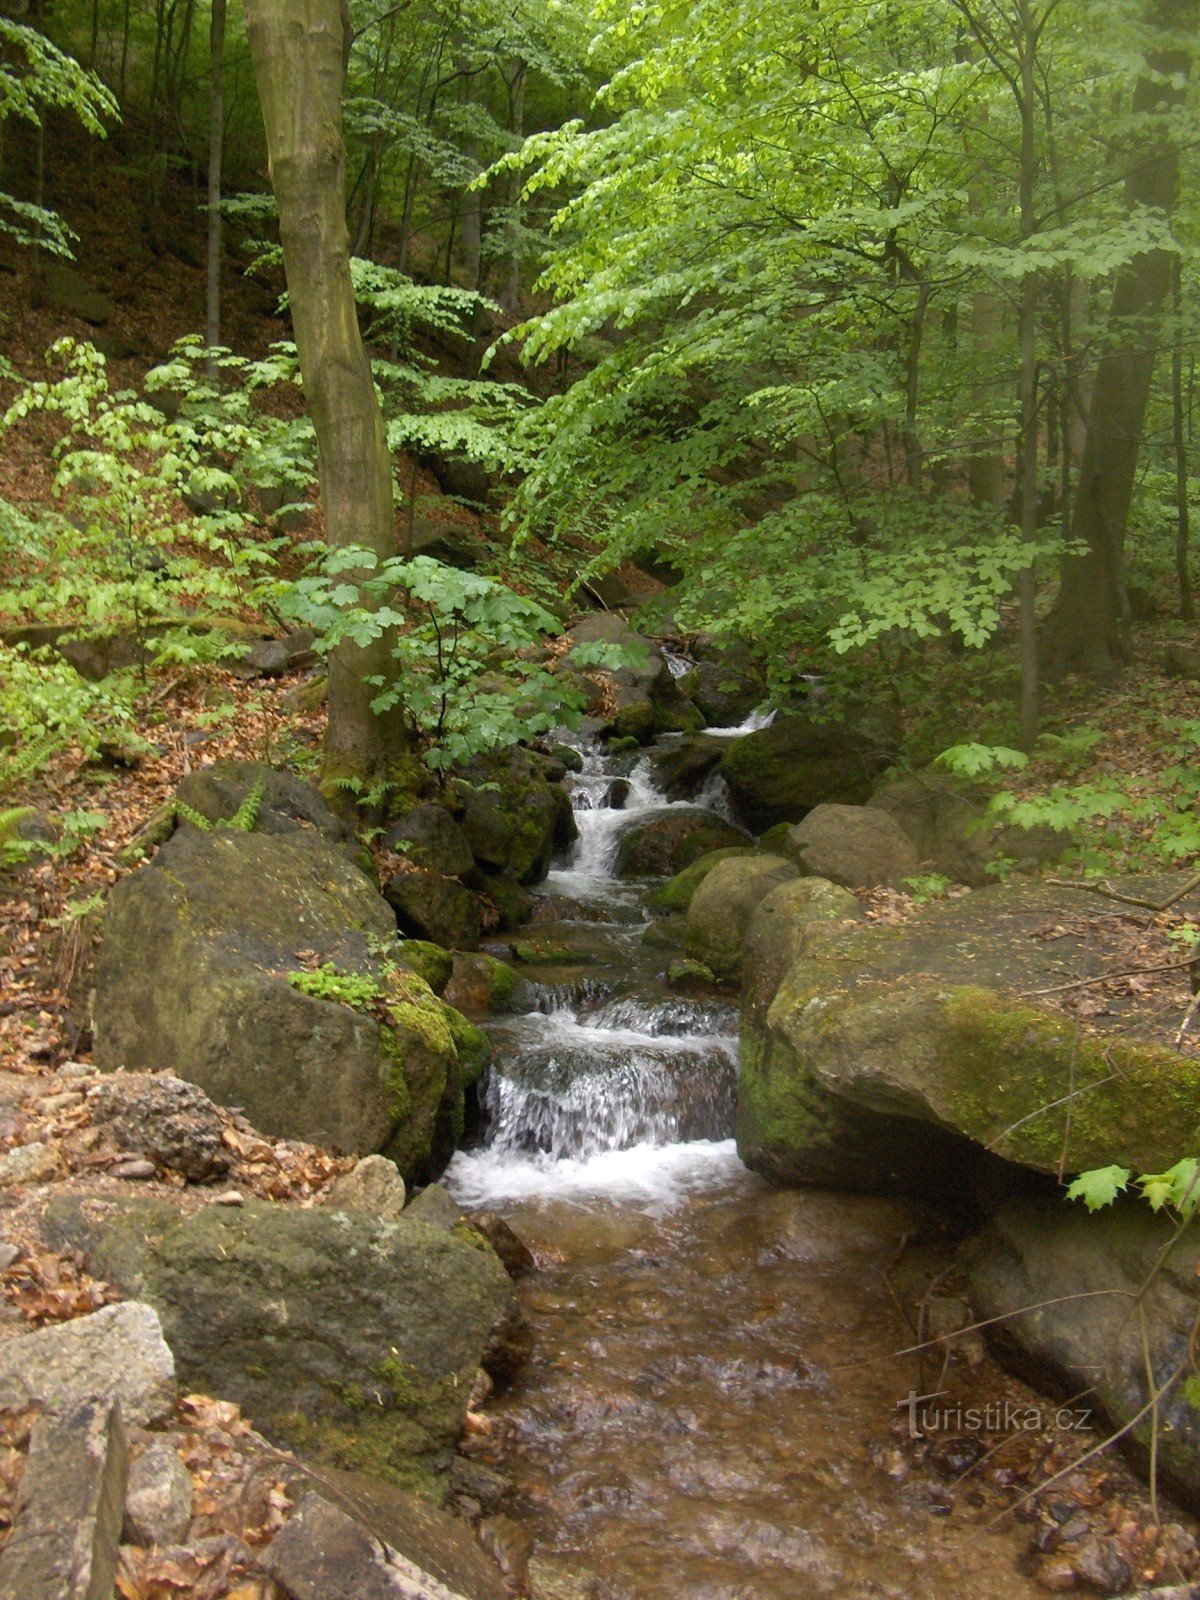 Albrechtický stream valley.